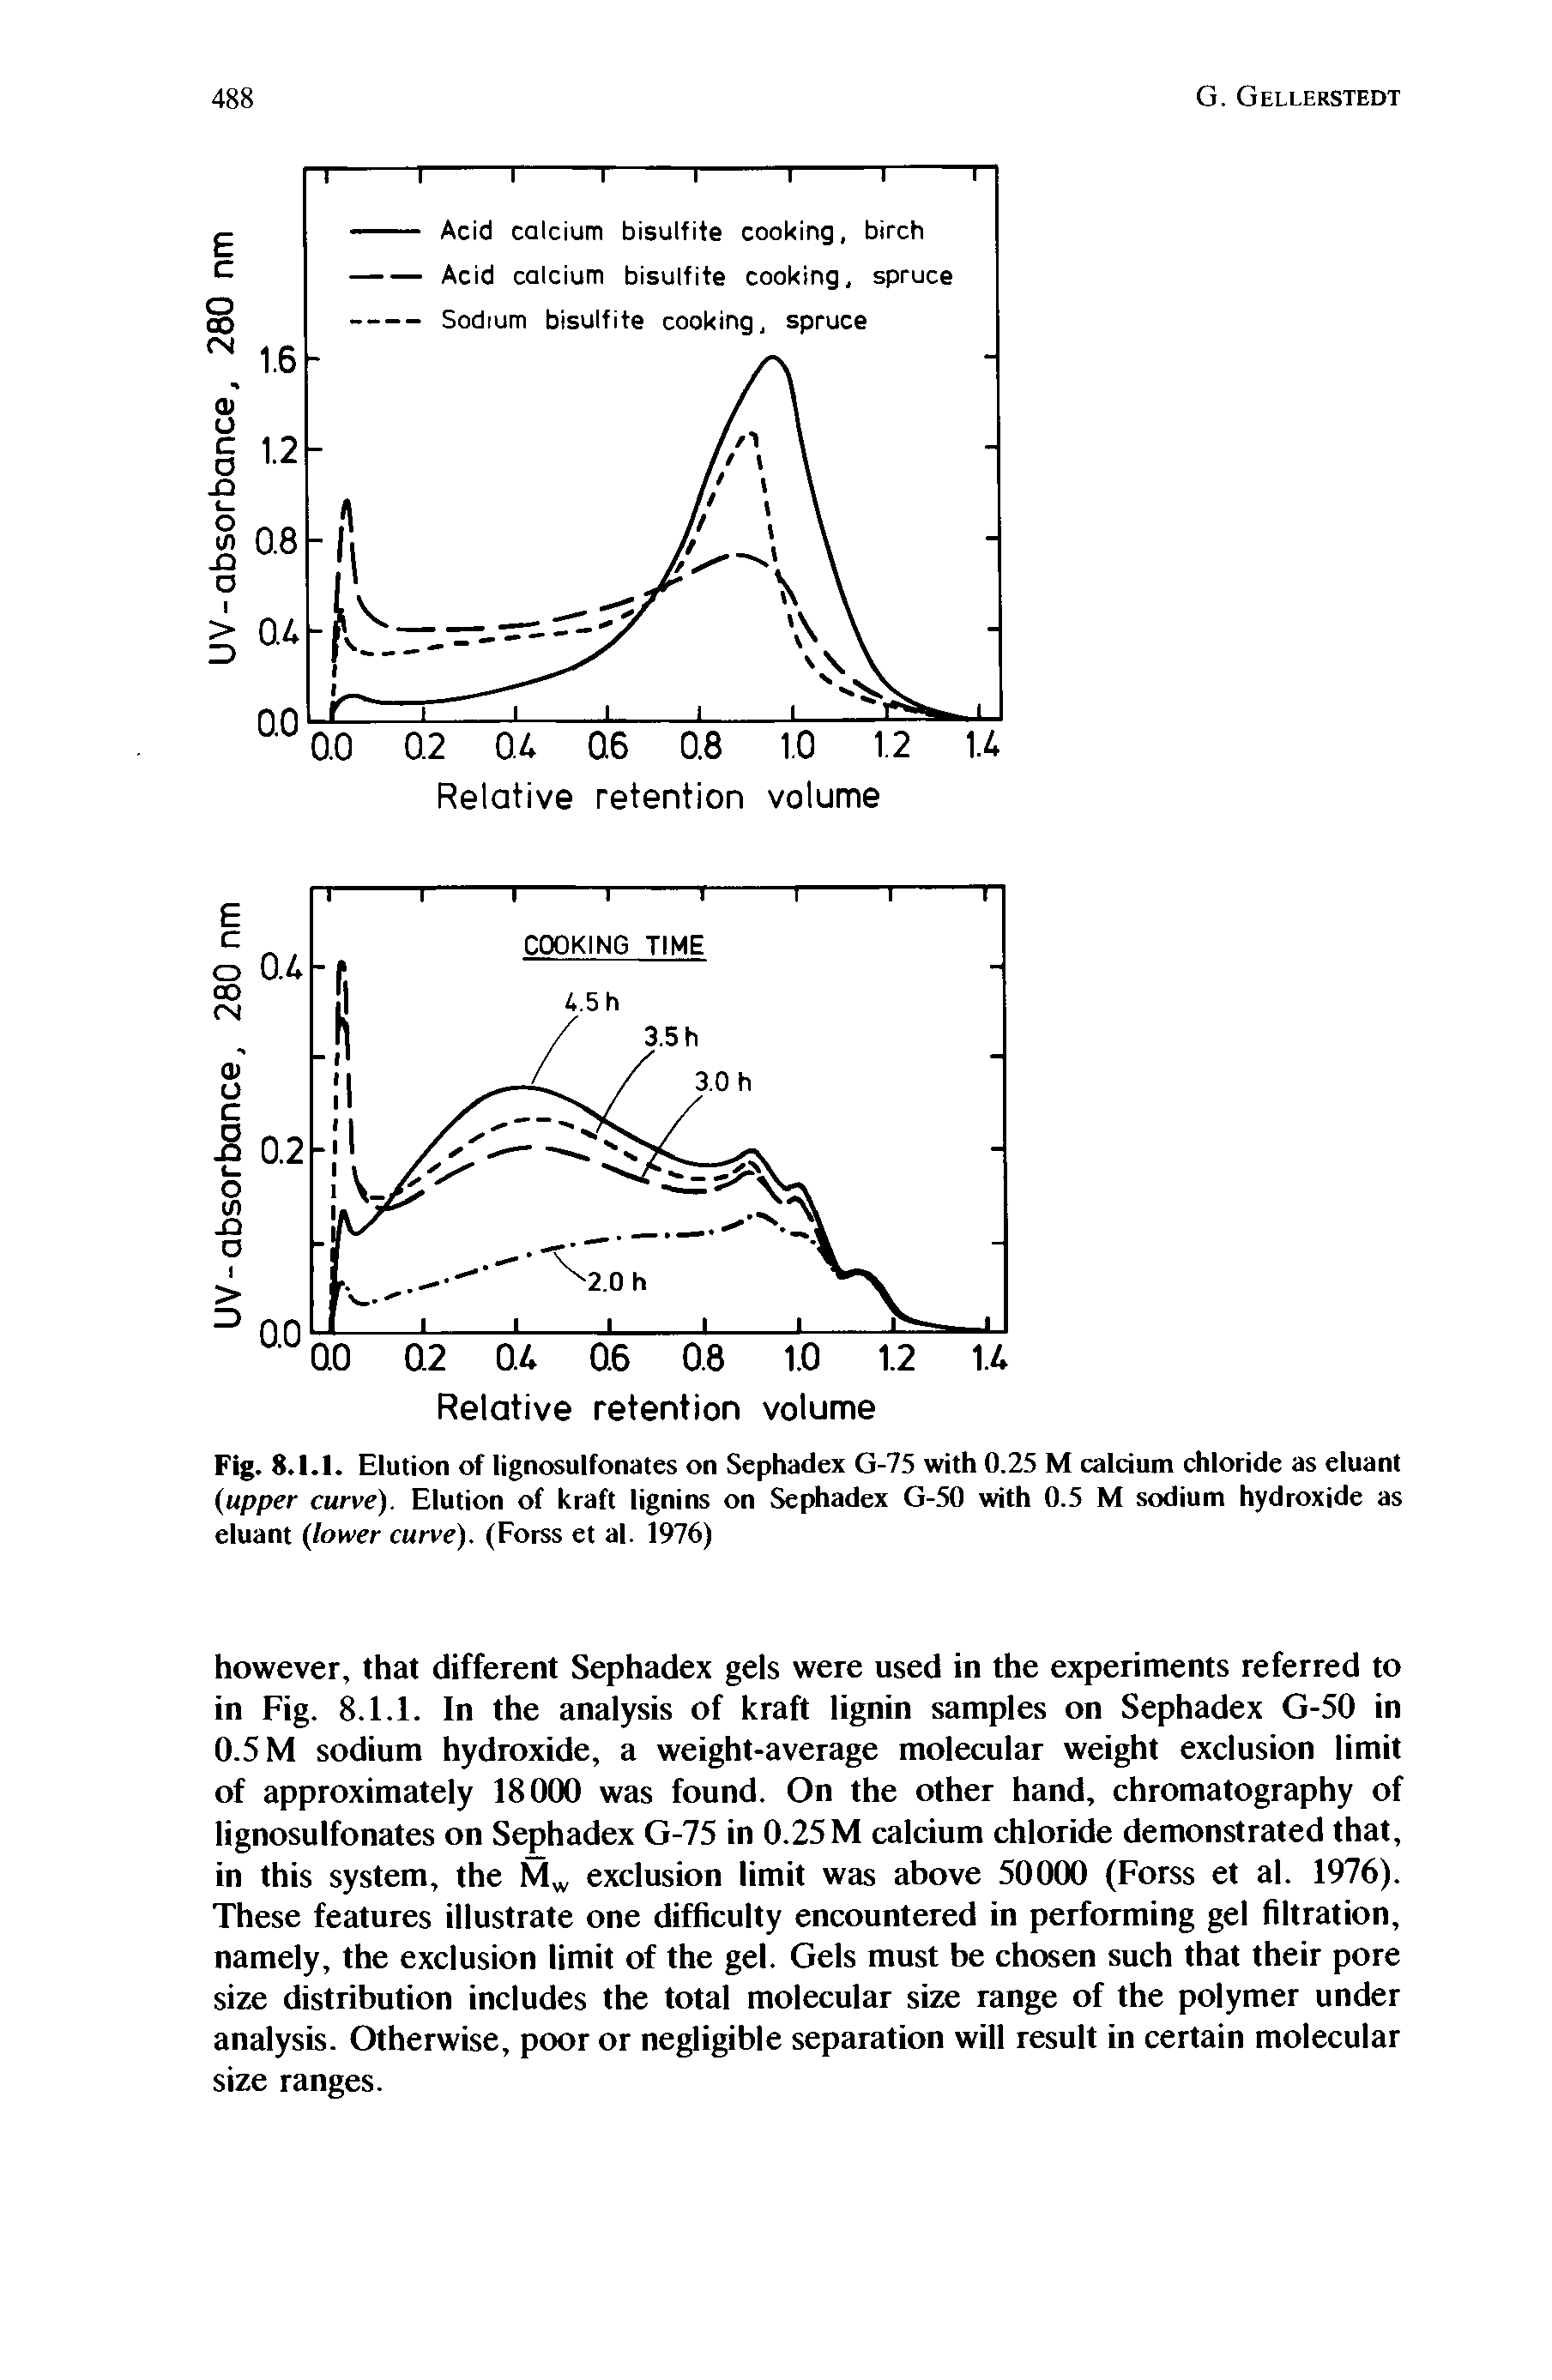 Fig. 8.1.1. Elution of lignosulfonates on Sephadex G-75 with 0.25 M calcium chloride as eluant (upper curve). Elution of kraft lignins on Sephadex G-50 with 0.5 M sodium hydroxide as eluant (lower curve). (Forss et al. 1976)...